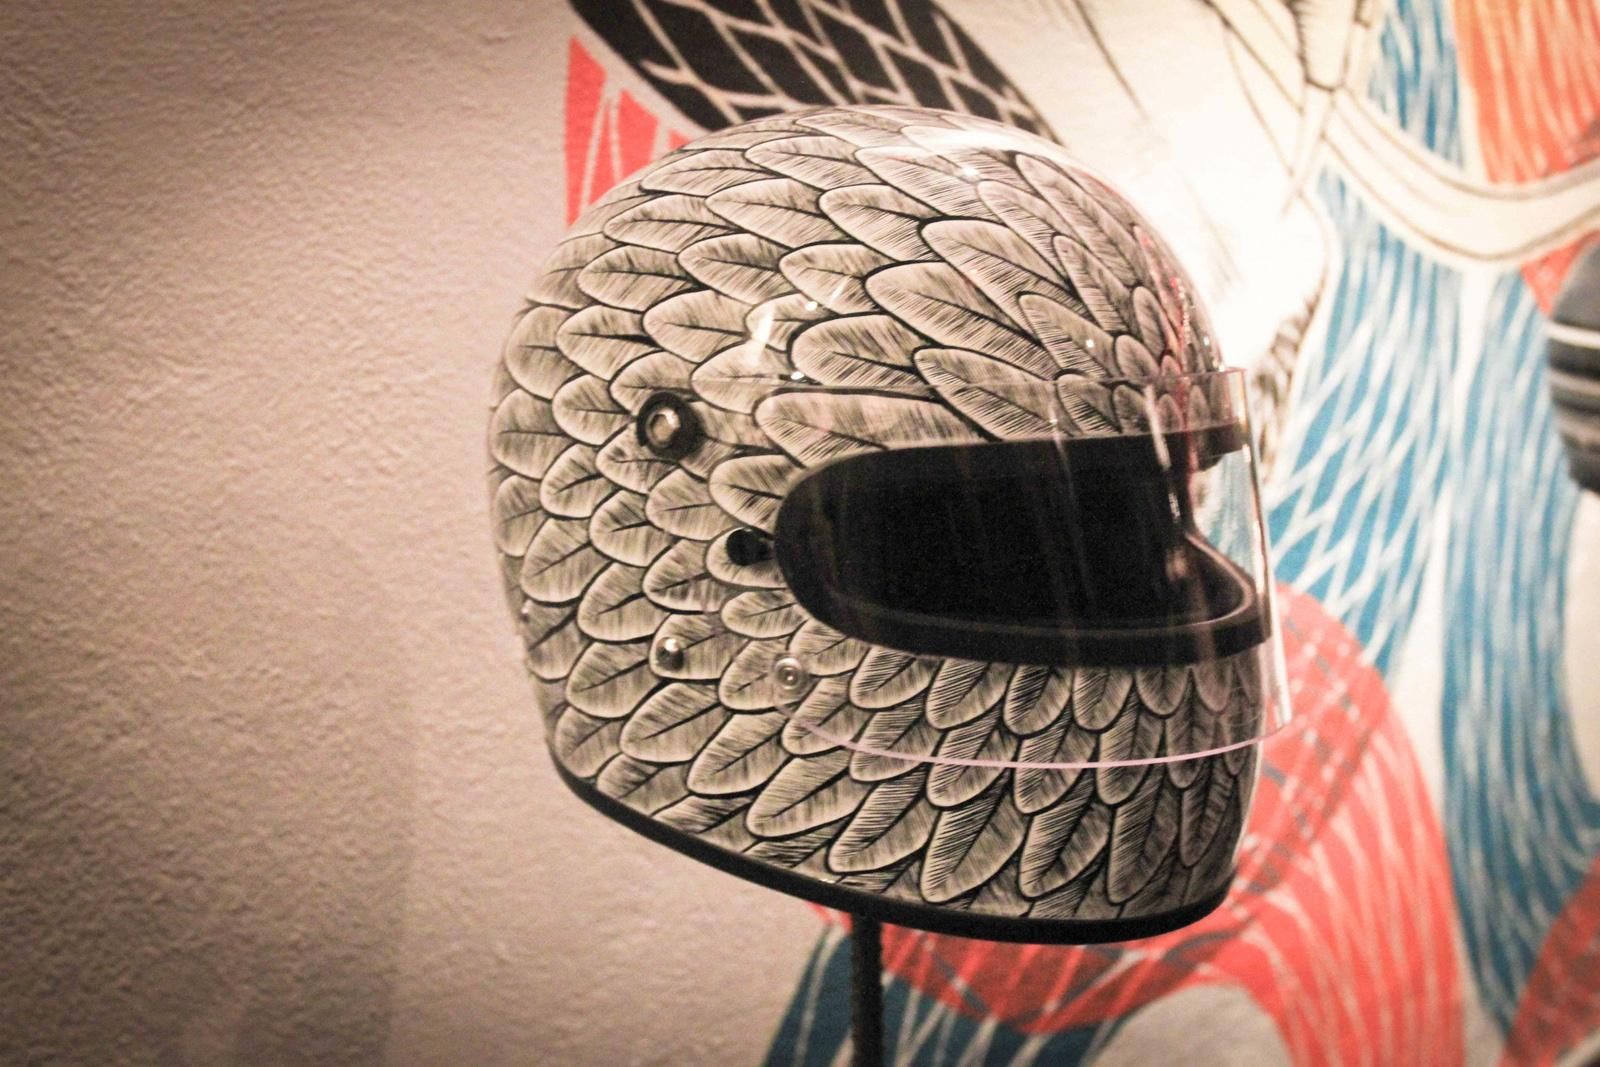 21 Helmets - One Motorcycle Show - Feather Helmet | Quickimage